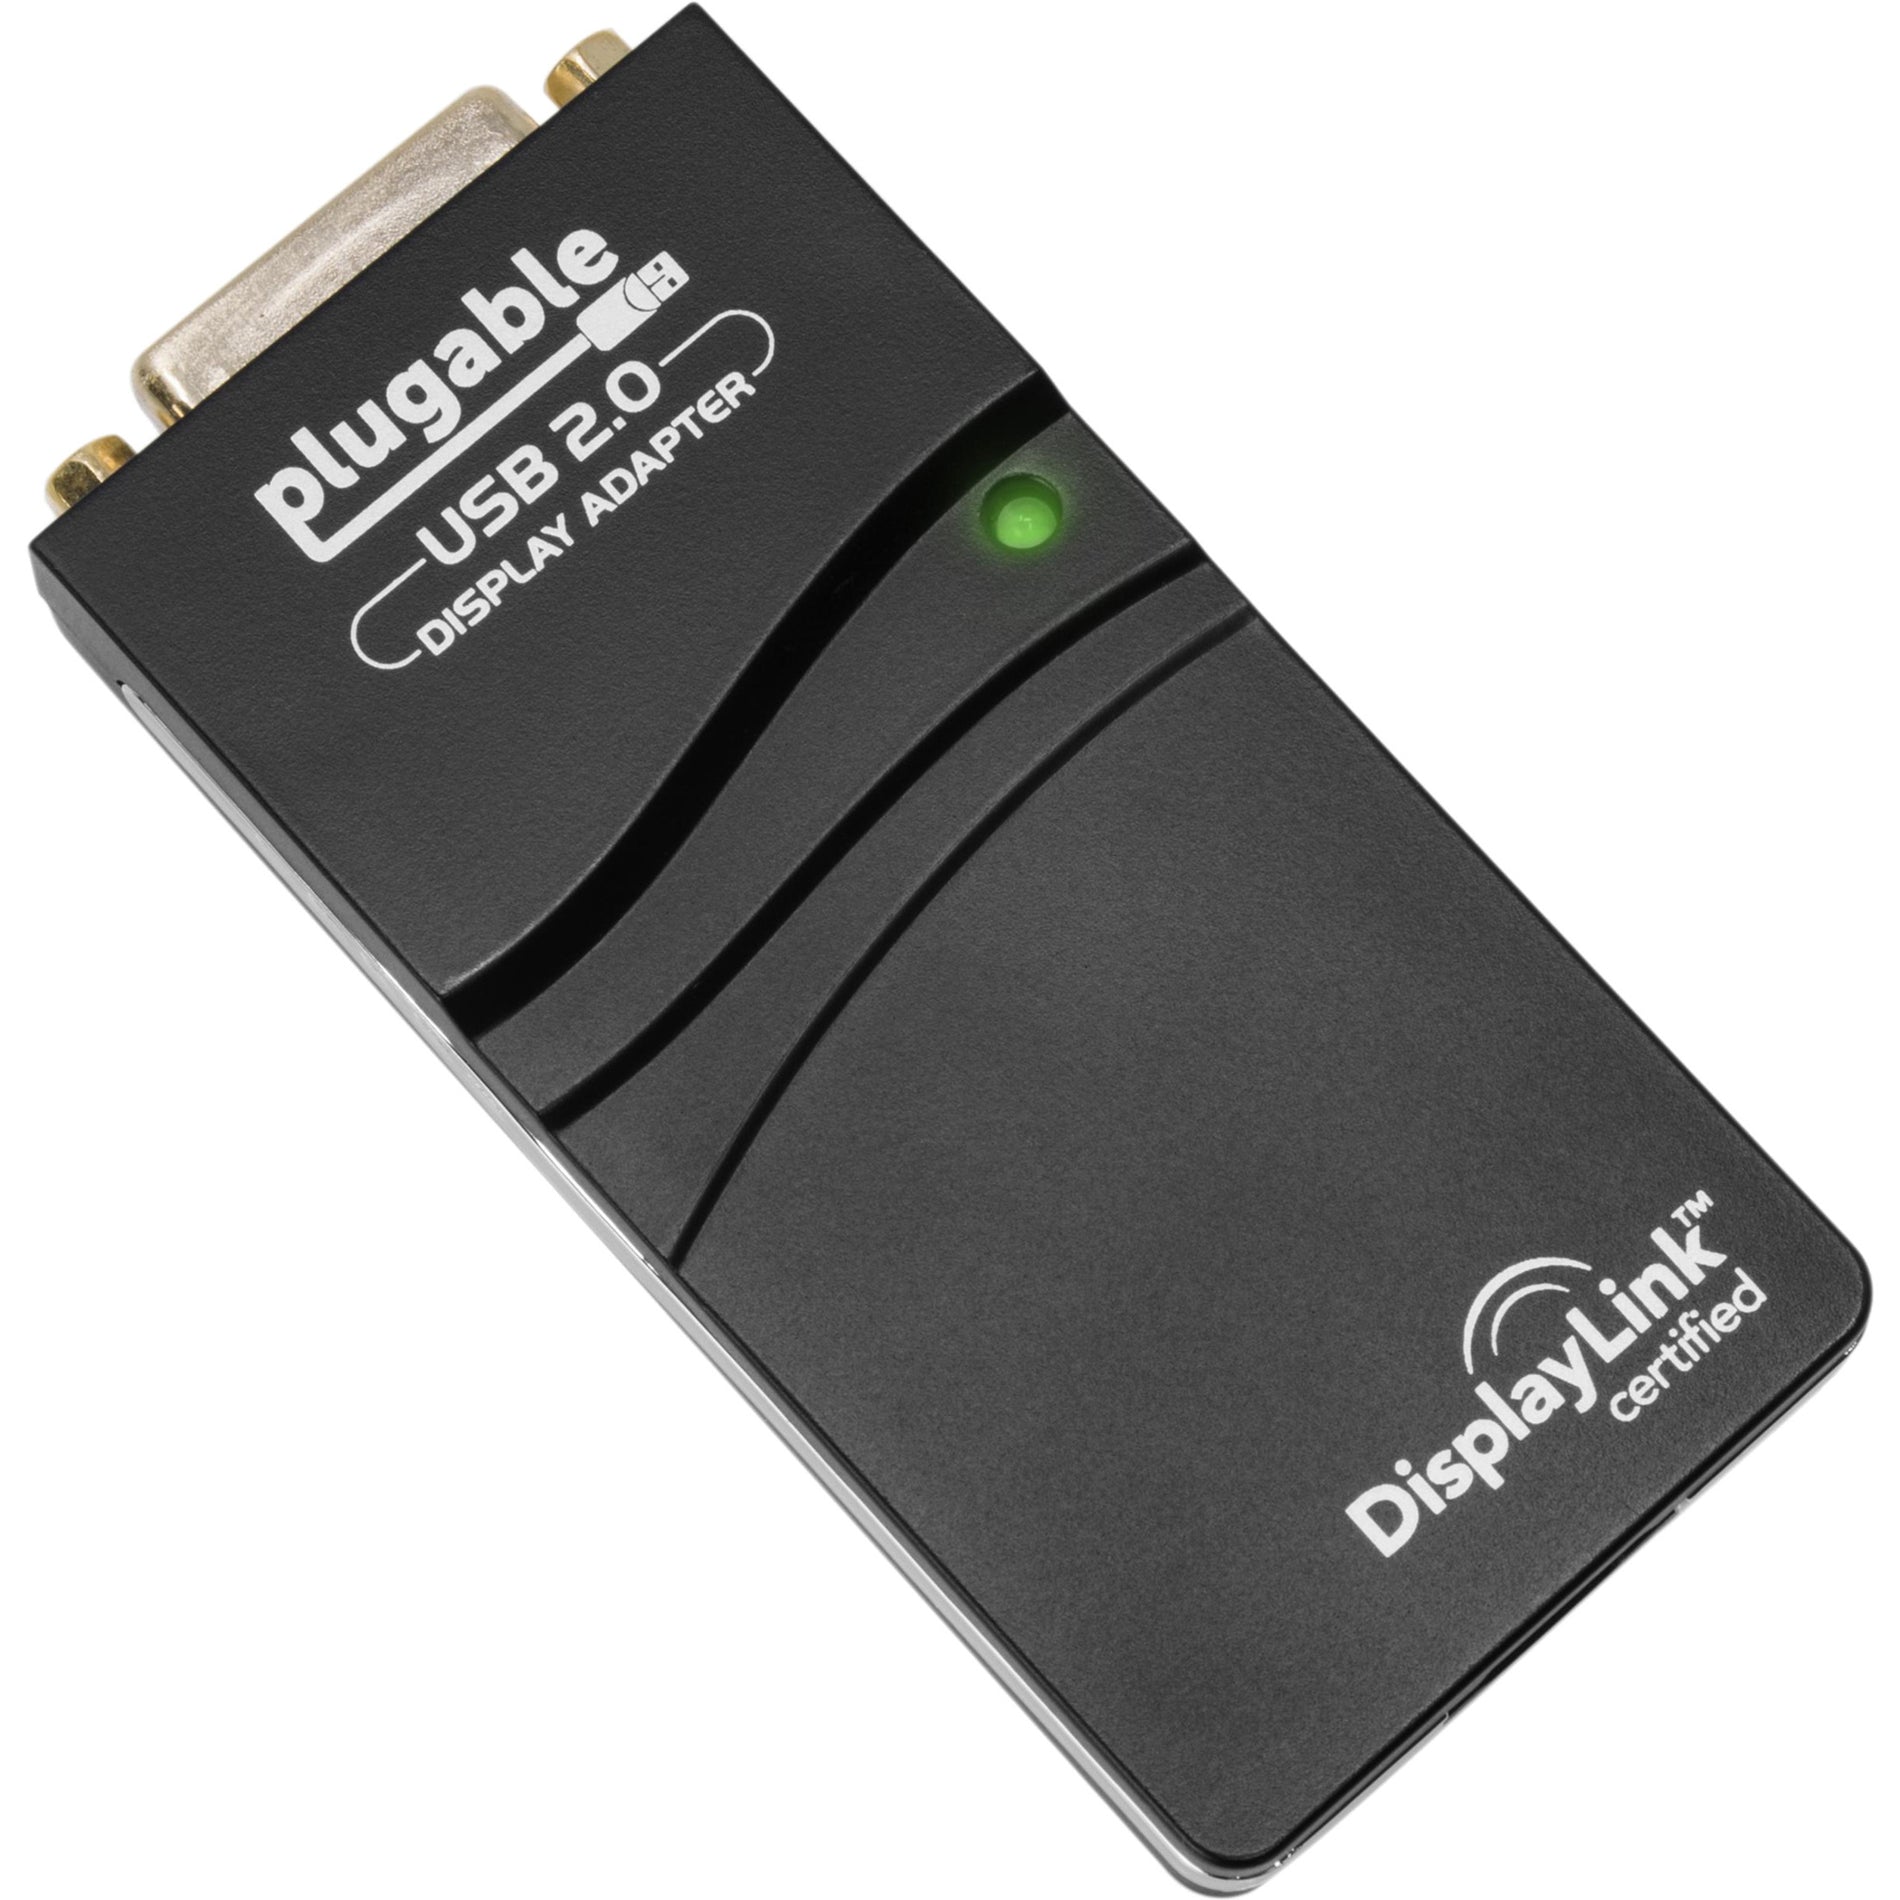 Adaptateur vidéo Plugable UGA-165 USB 2.0 vers DVI/VGA/HDMI pour Moniteurs Multiples Brancher et Utiliser